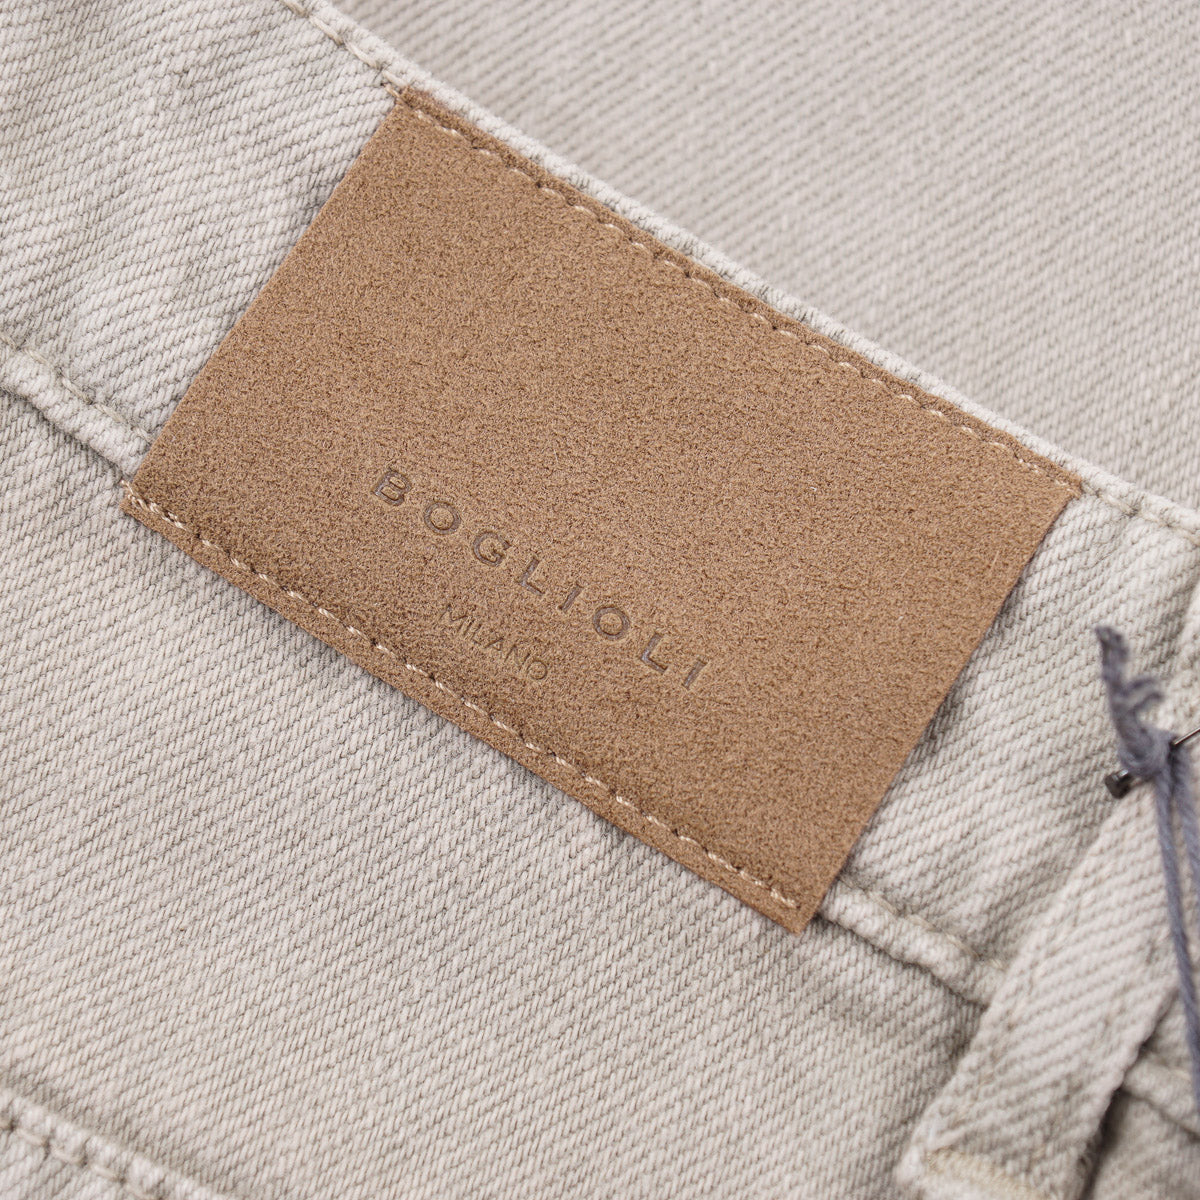 Boglioli Garment-Dyed Soft Denim Jeans - Top Shelf Apparel